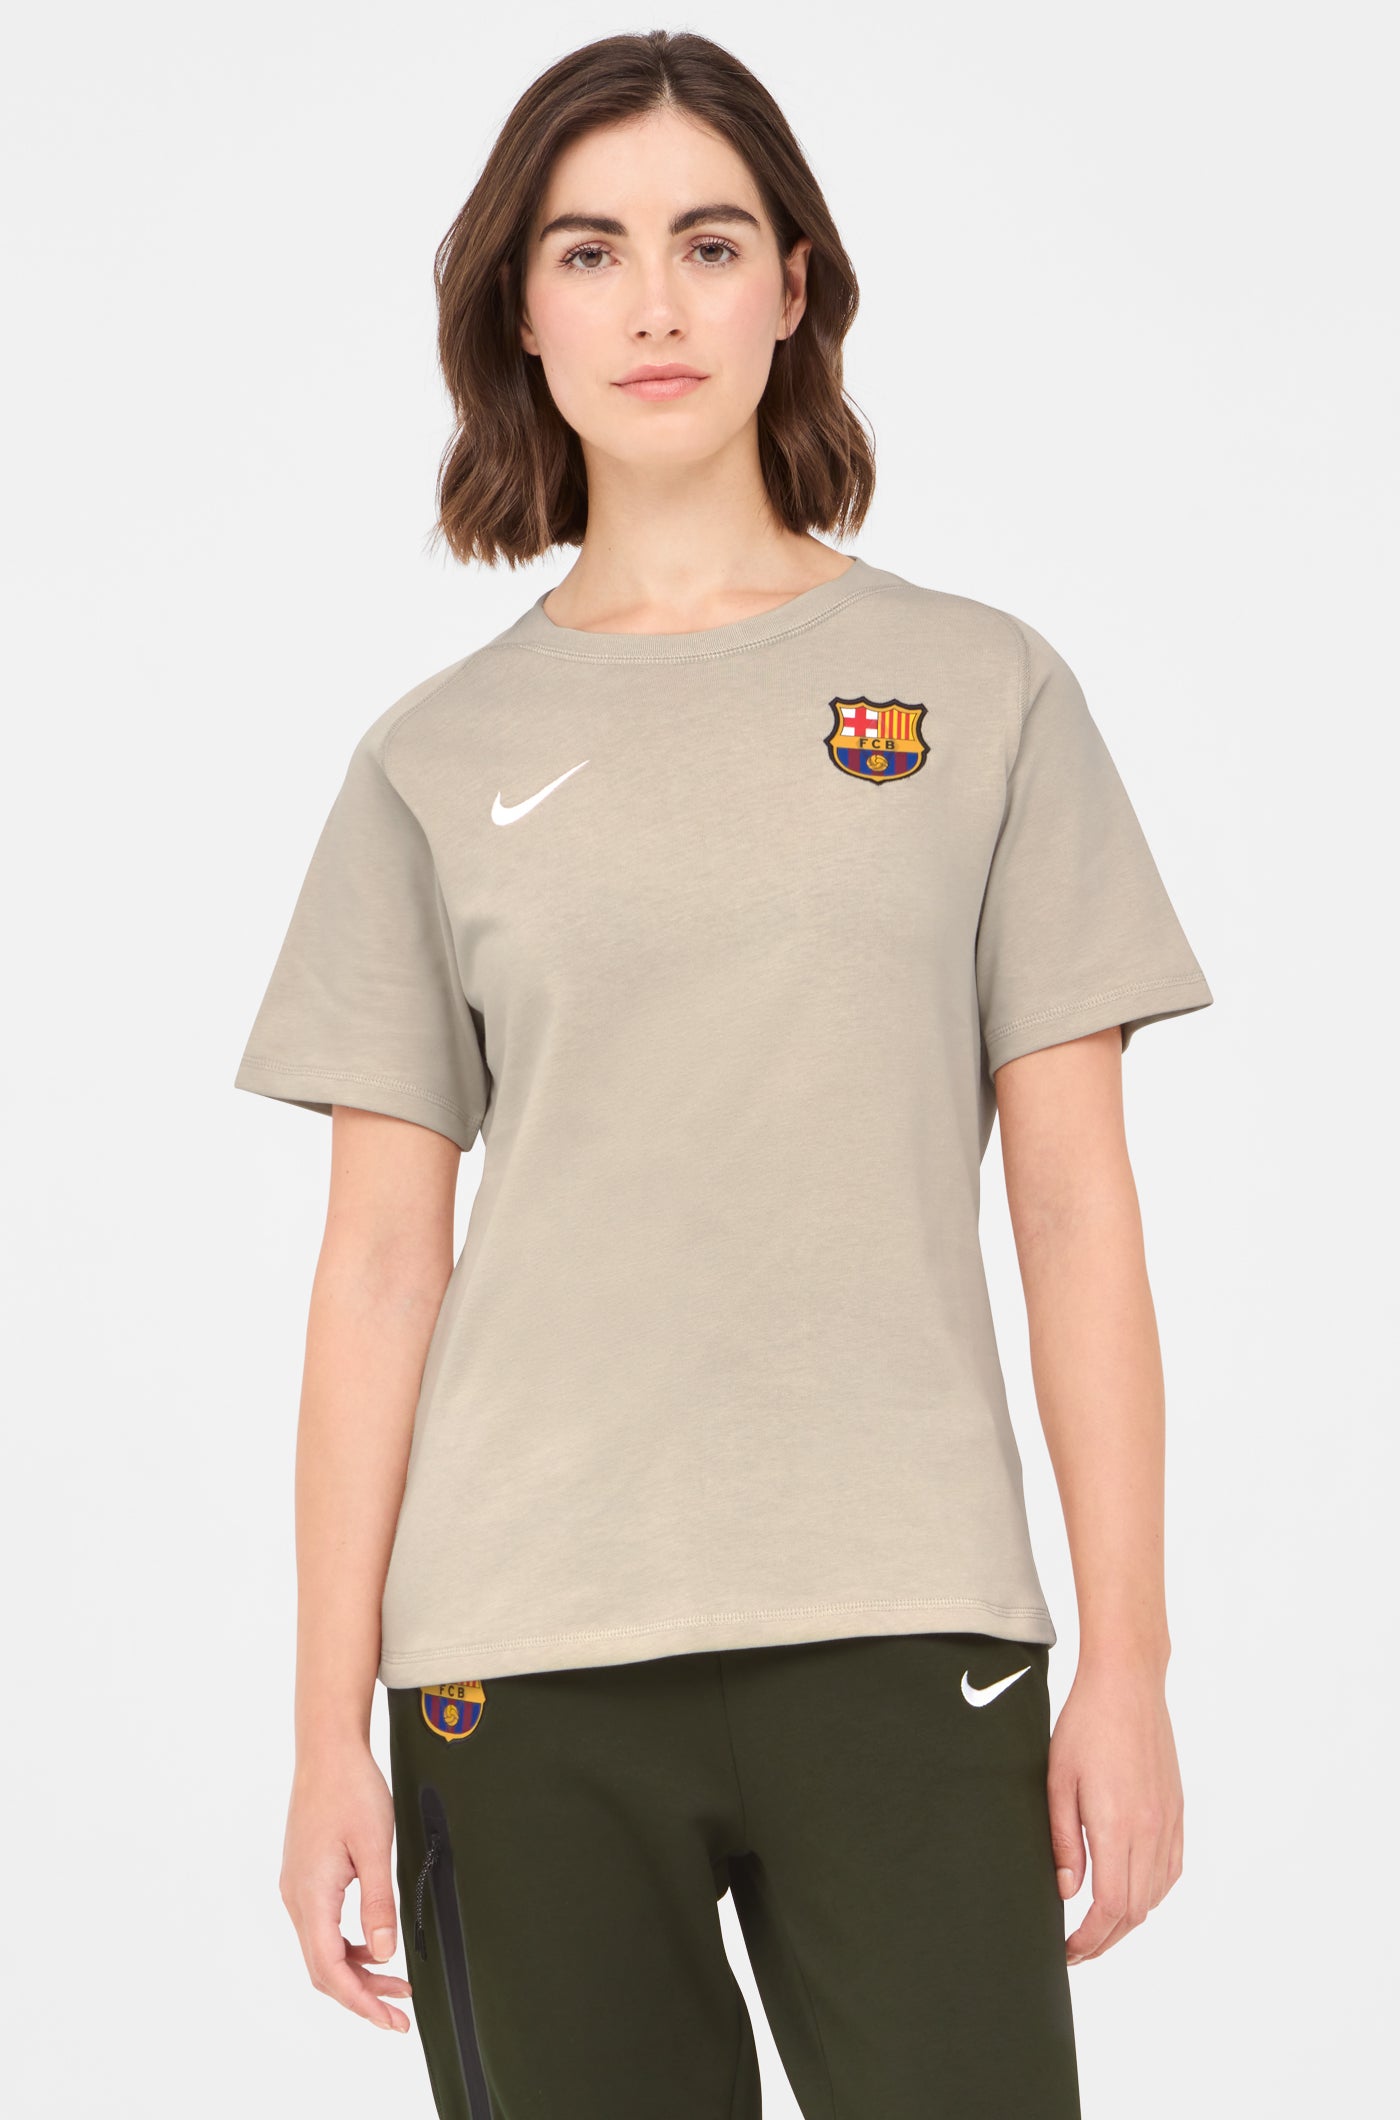 Culers-T-Shirt Barça Nike – Damen